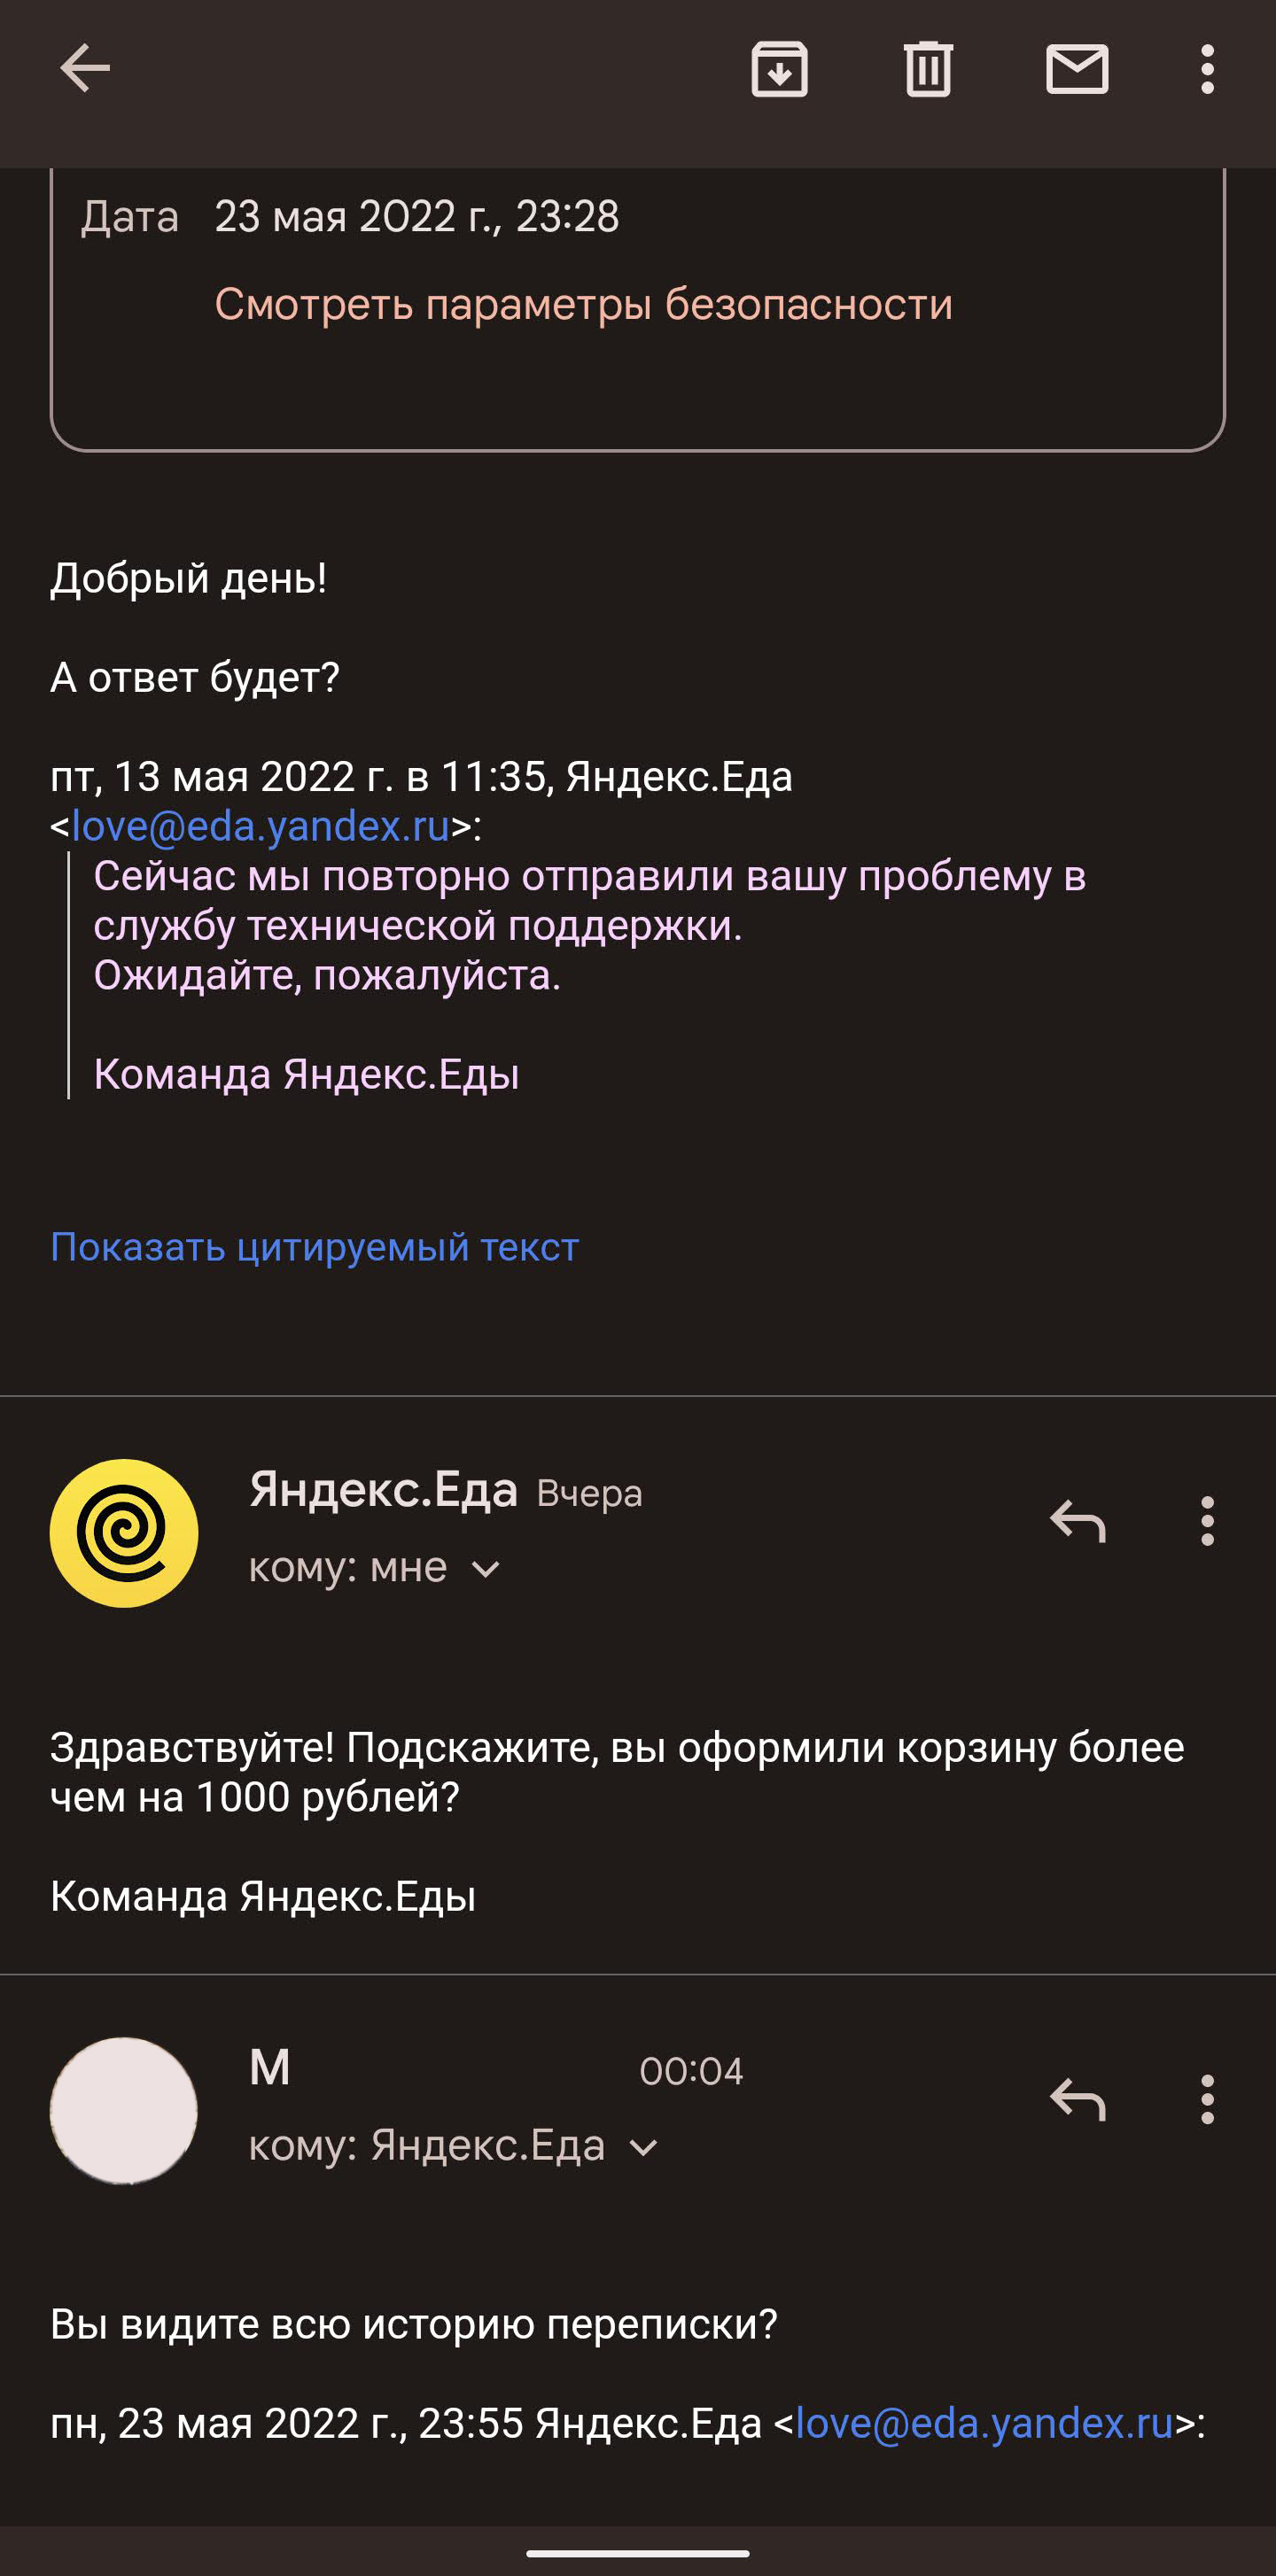 Коротко об адекватности поддержки Яндекс.Еды